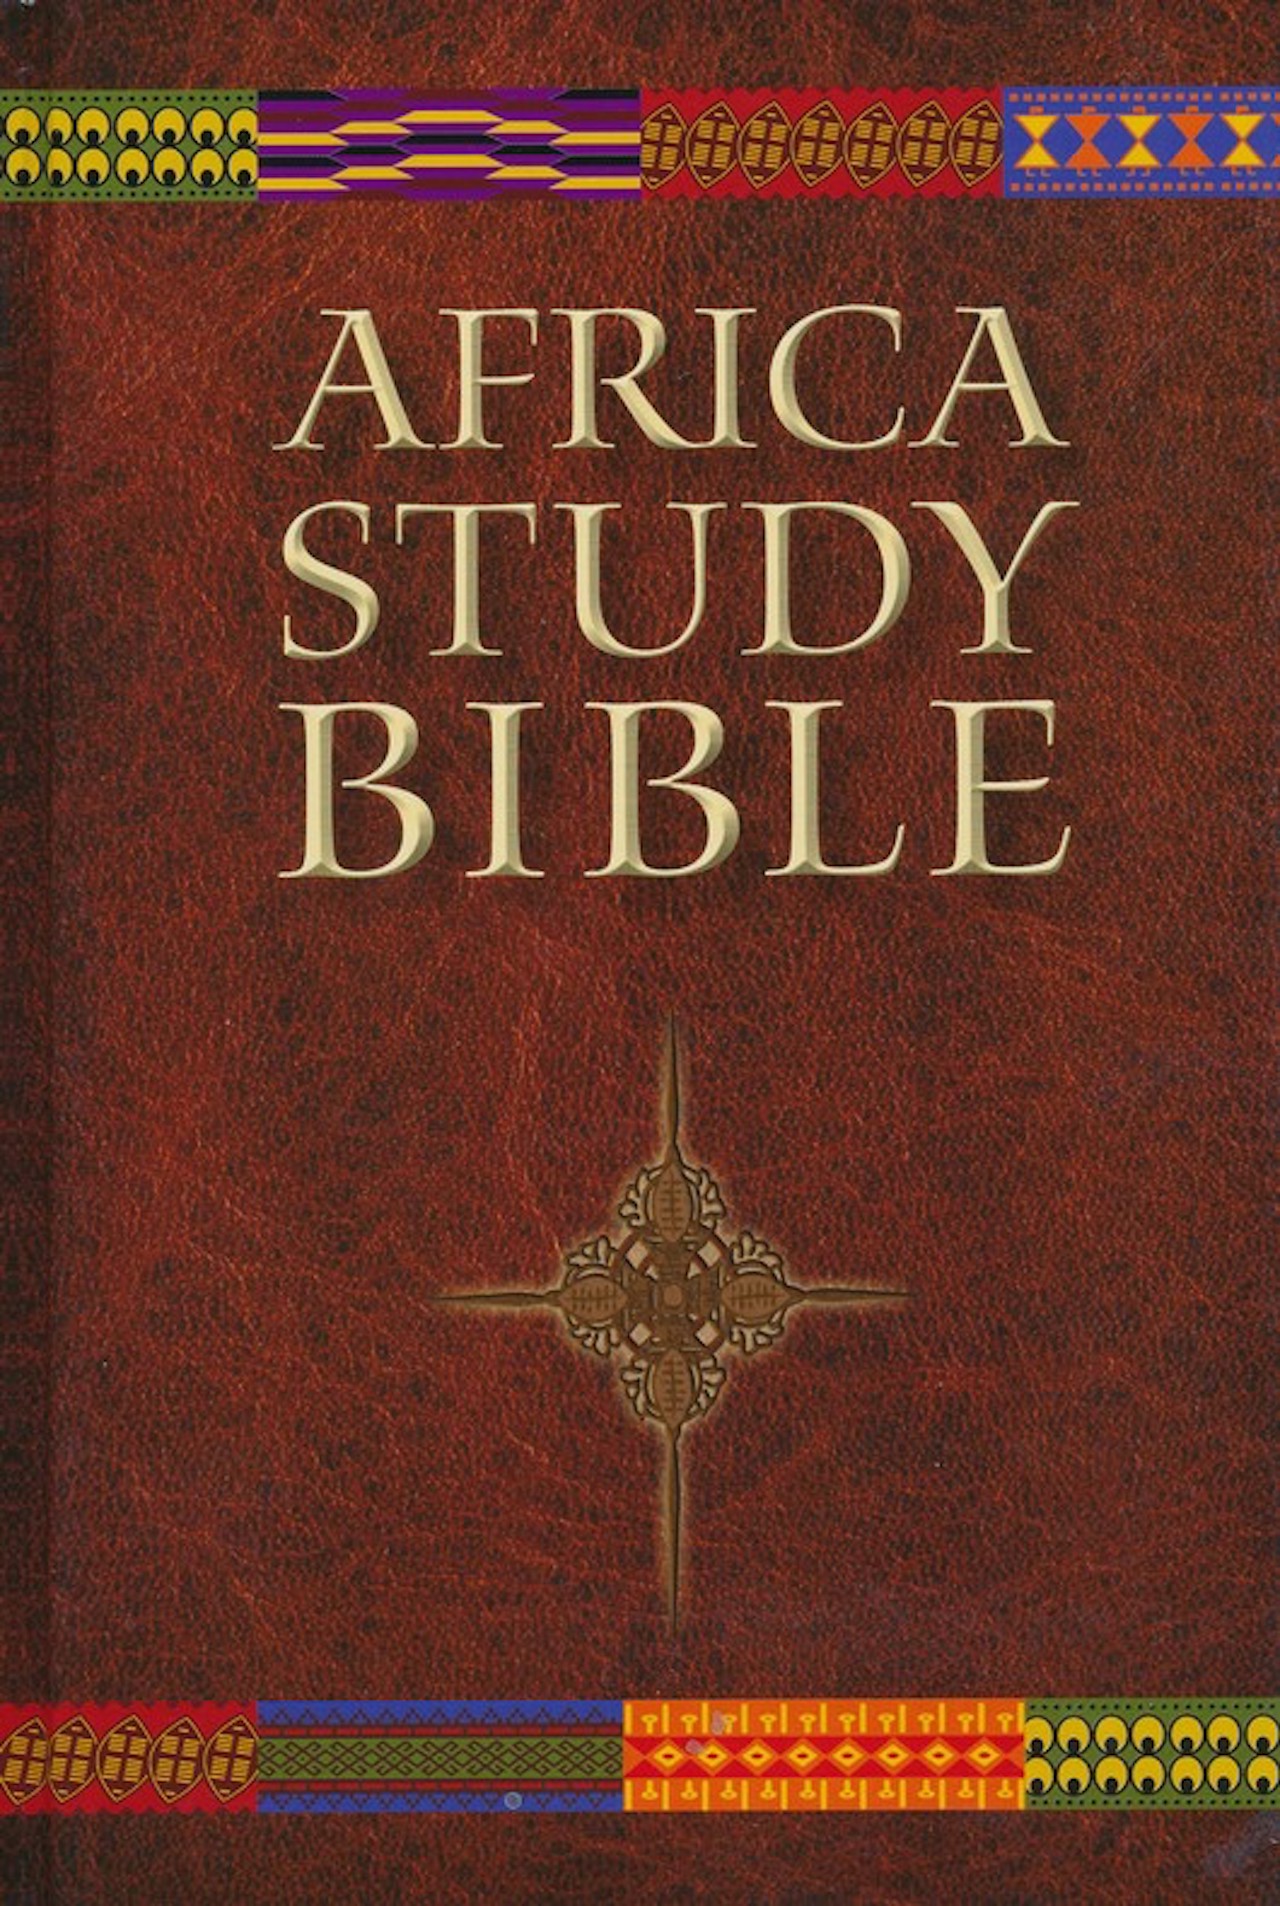 Africa Study Bible, The New Living Translation (NLT), Hardcover